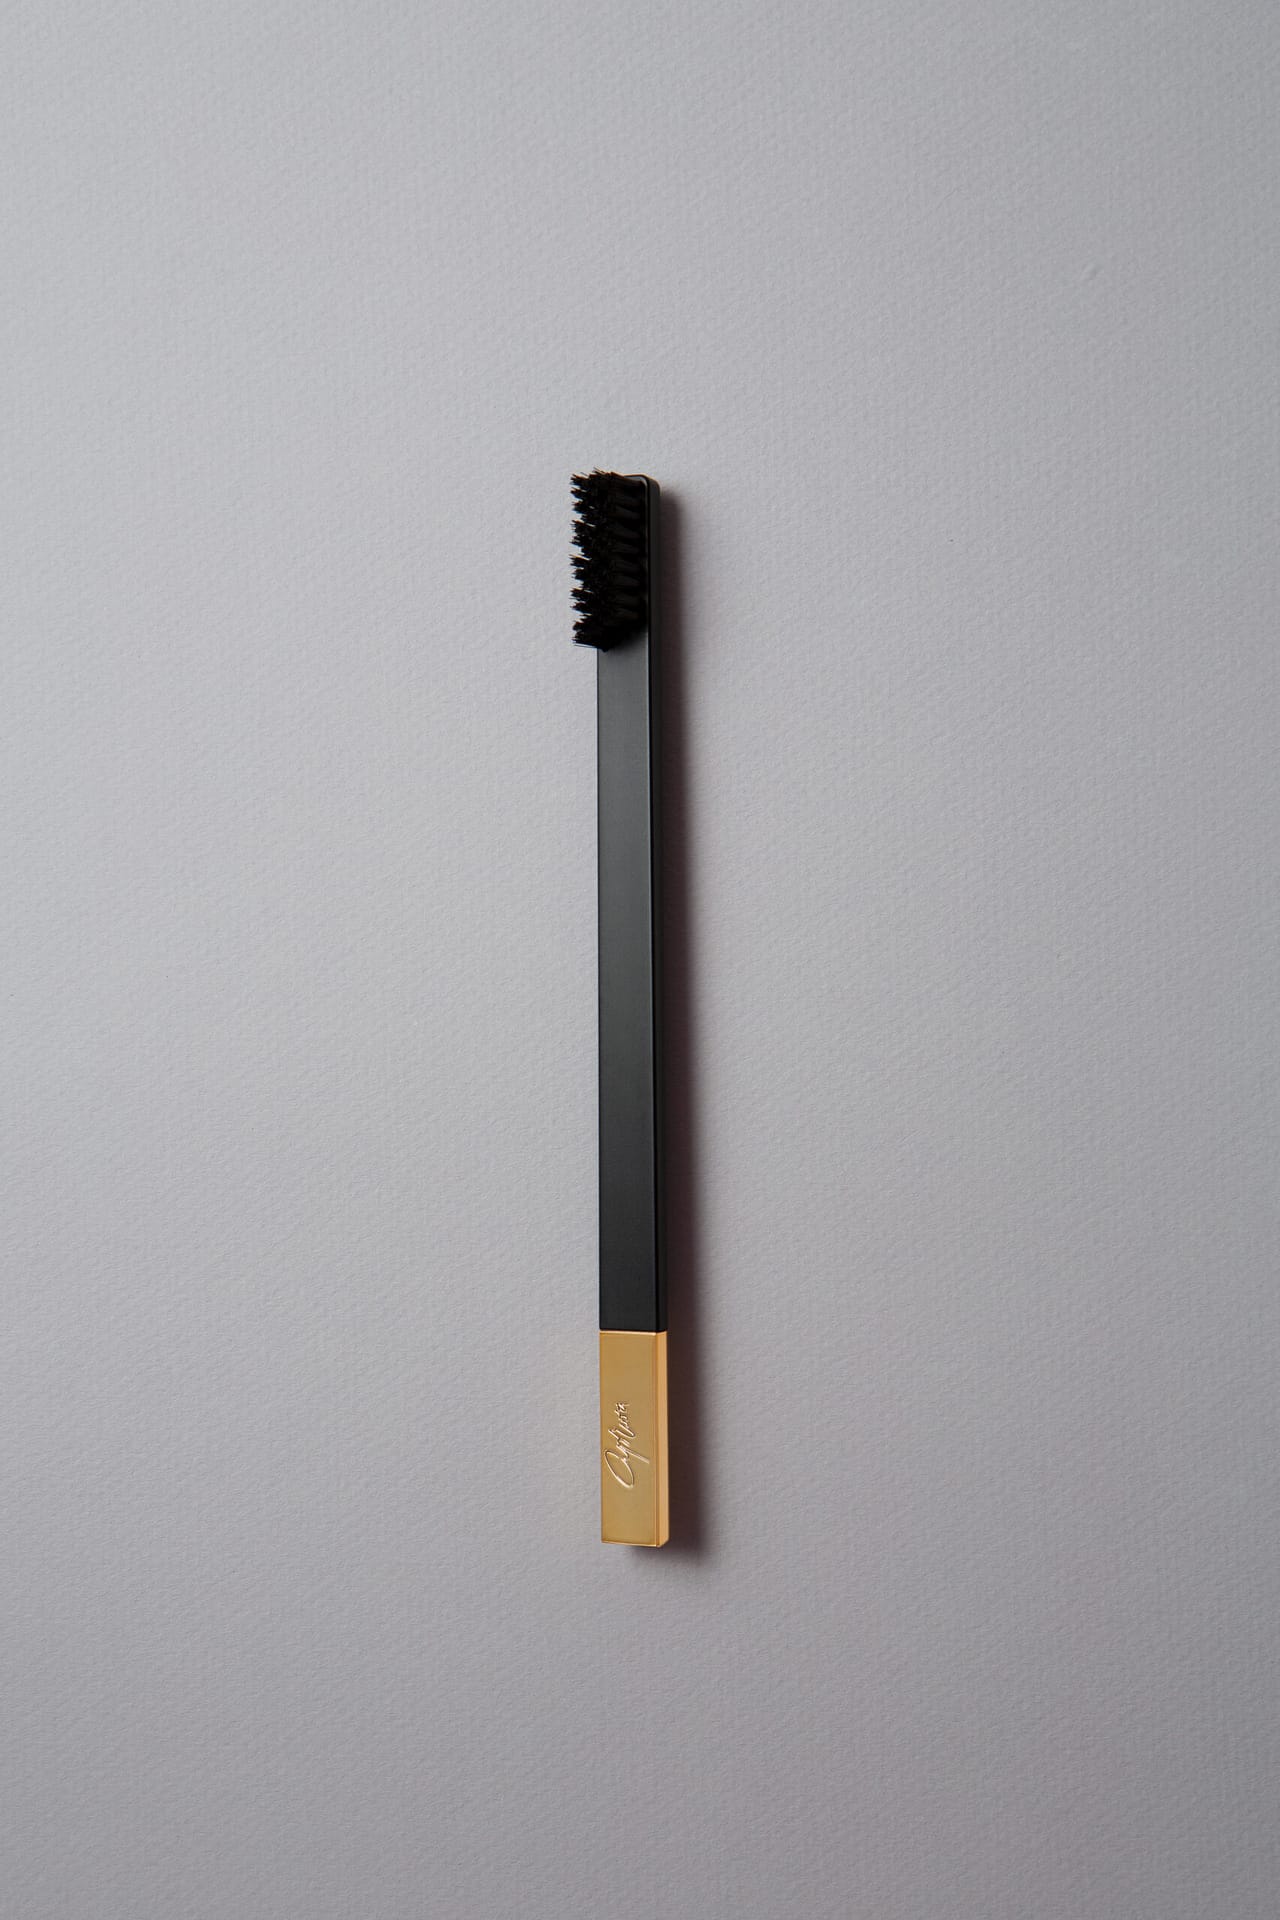 slim_black_gold_toothbrush_2a